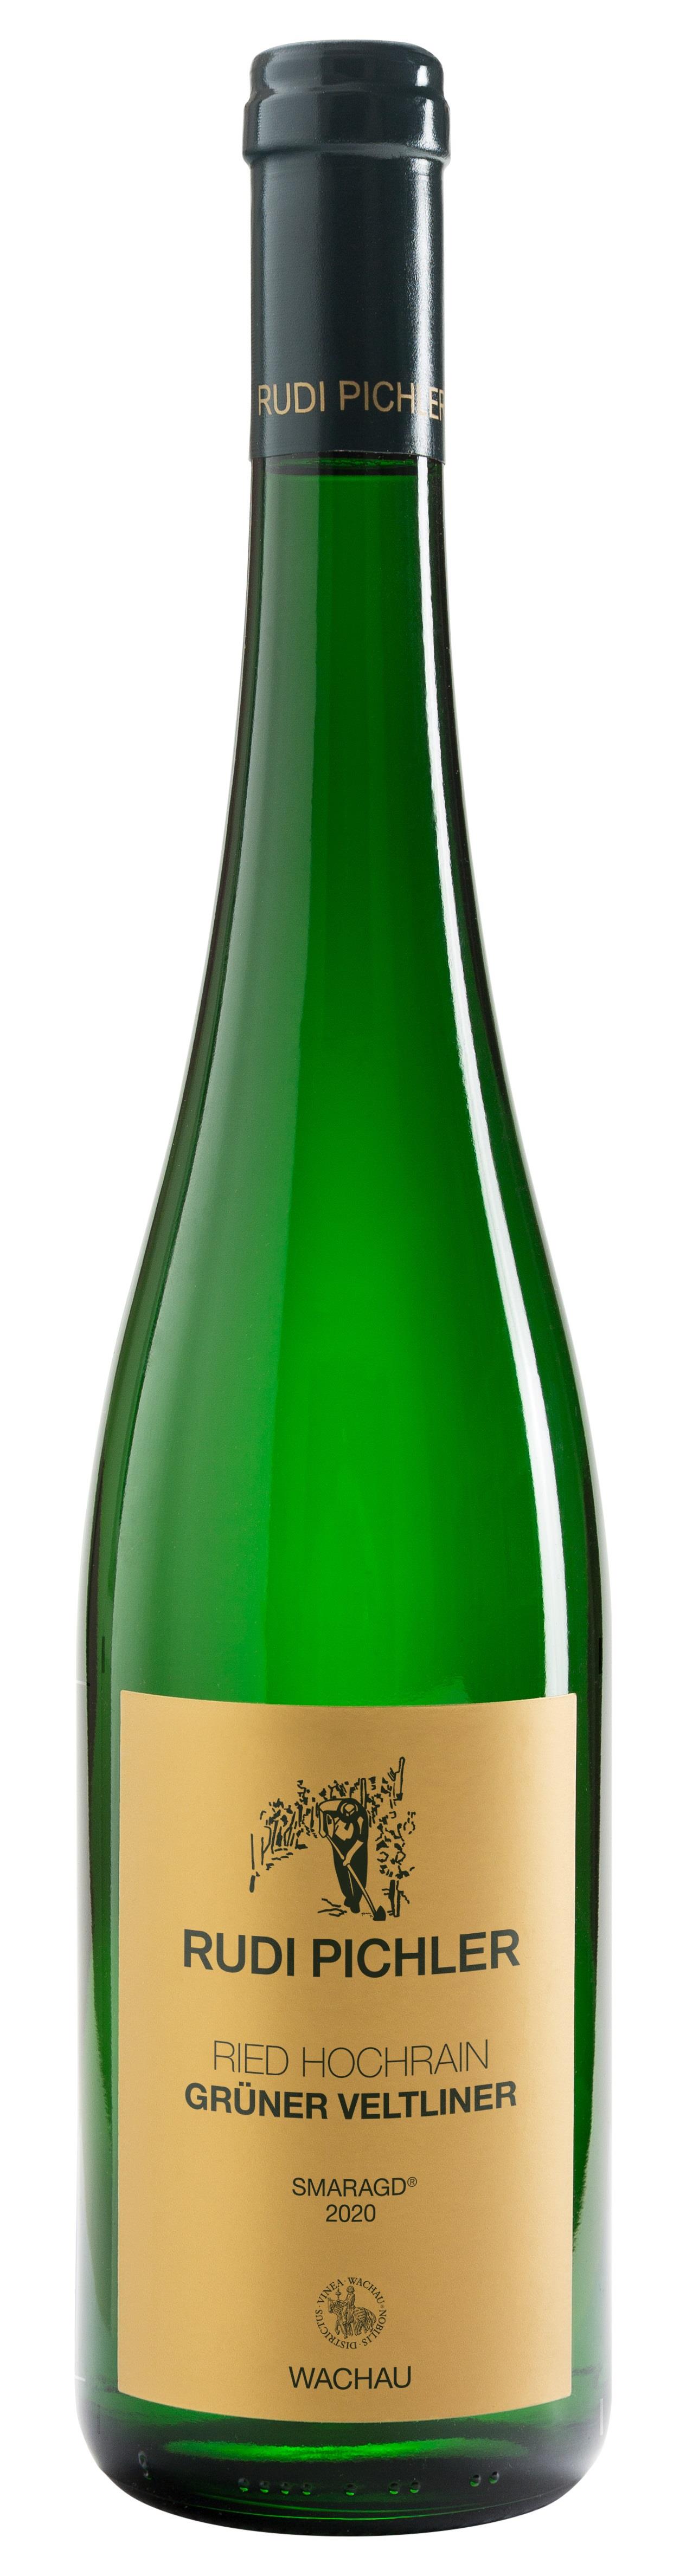 Weingut Rudi Pichler 2020 Ried Hochrain Grüner Veltliner Smaragd